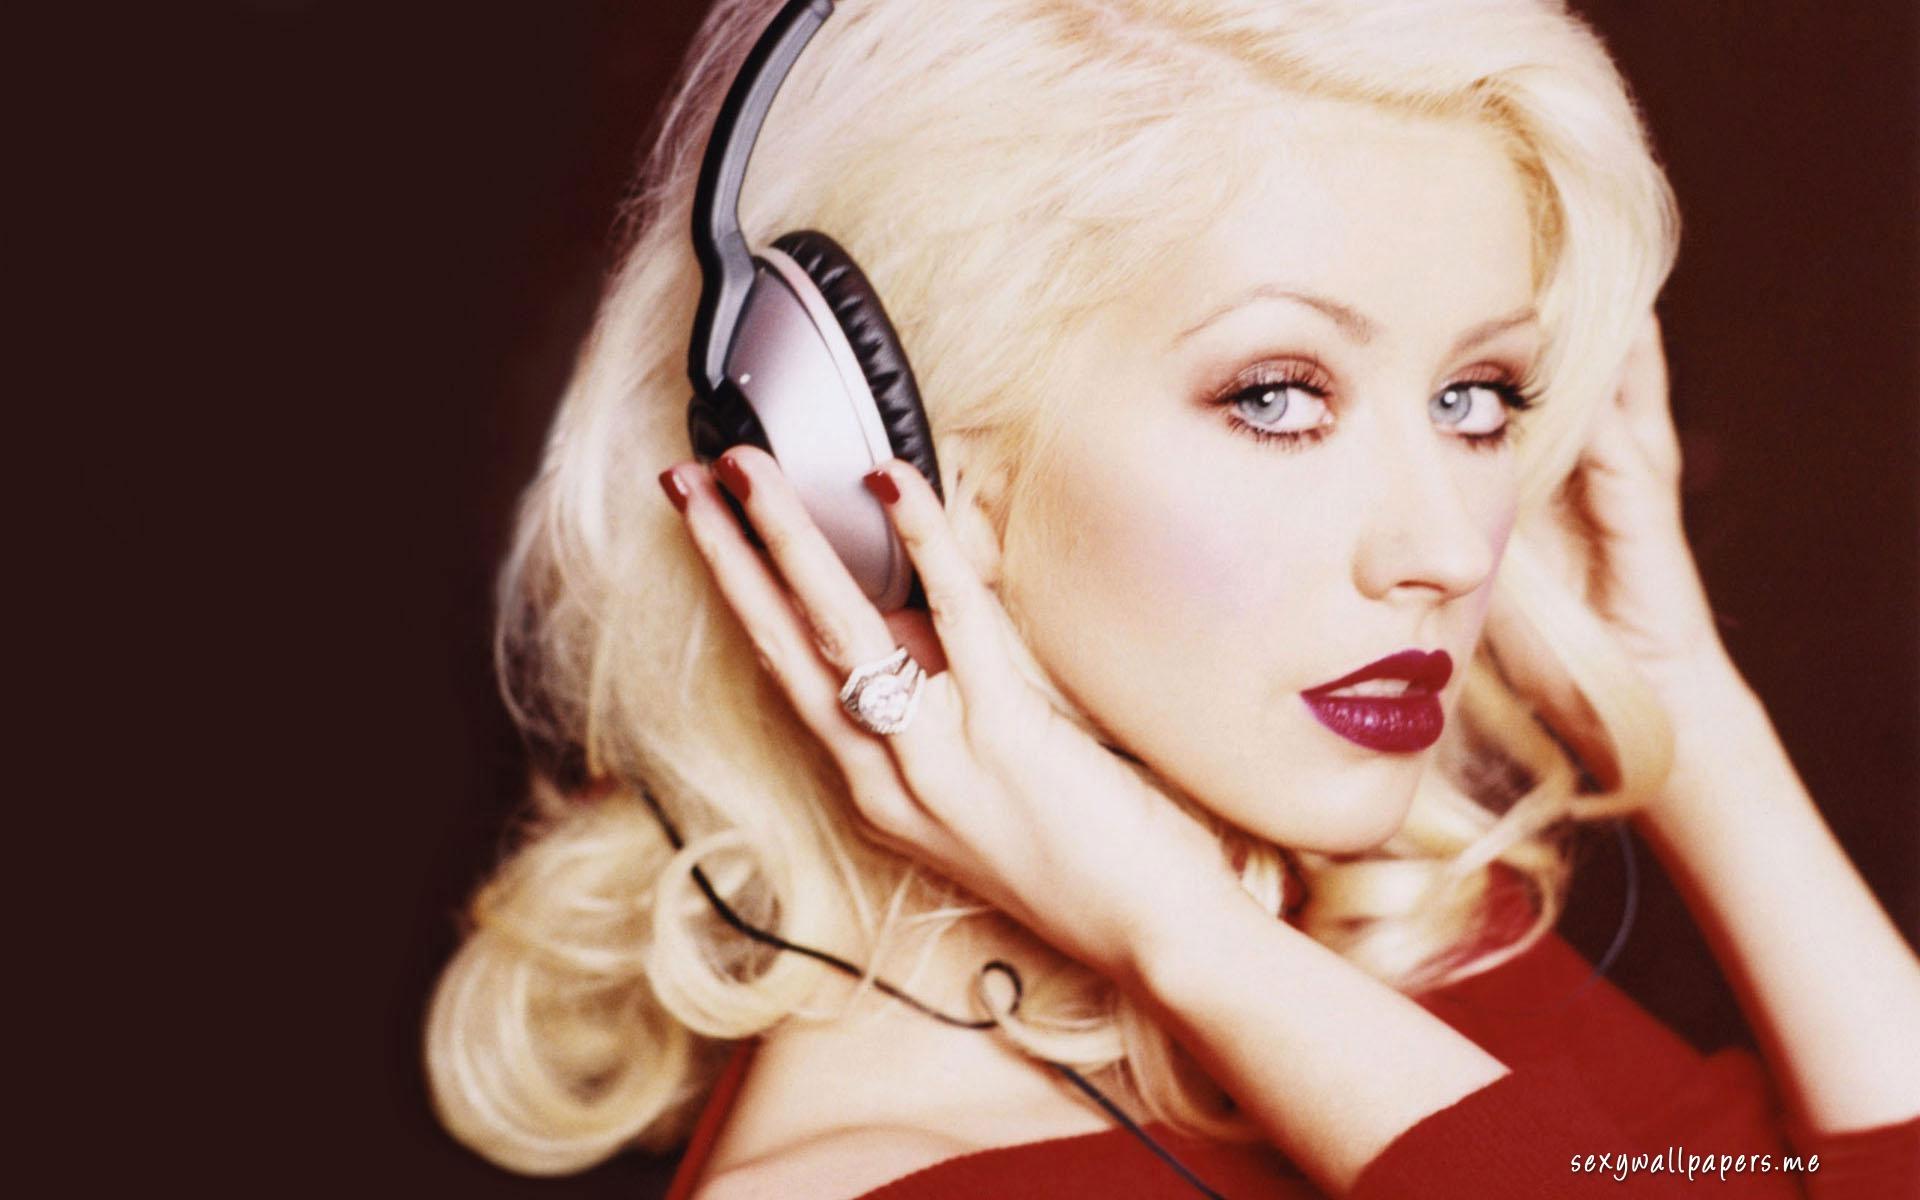 Christina Aguilera wallpaper №10877.